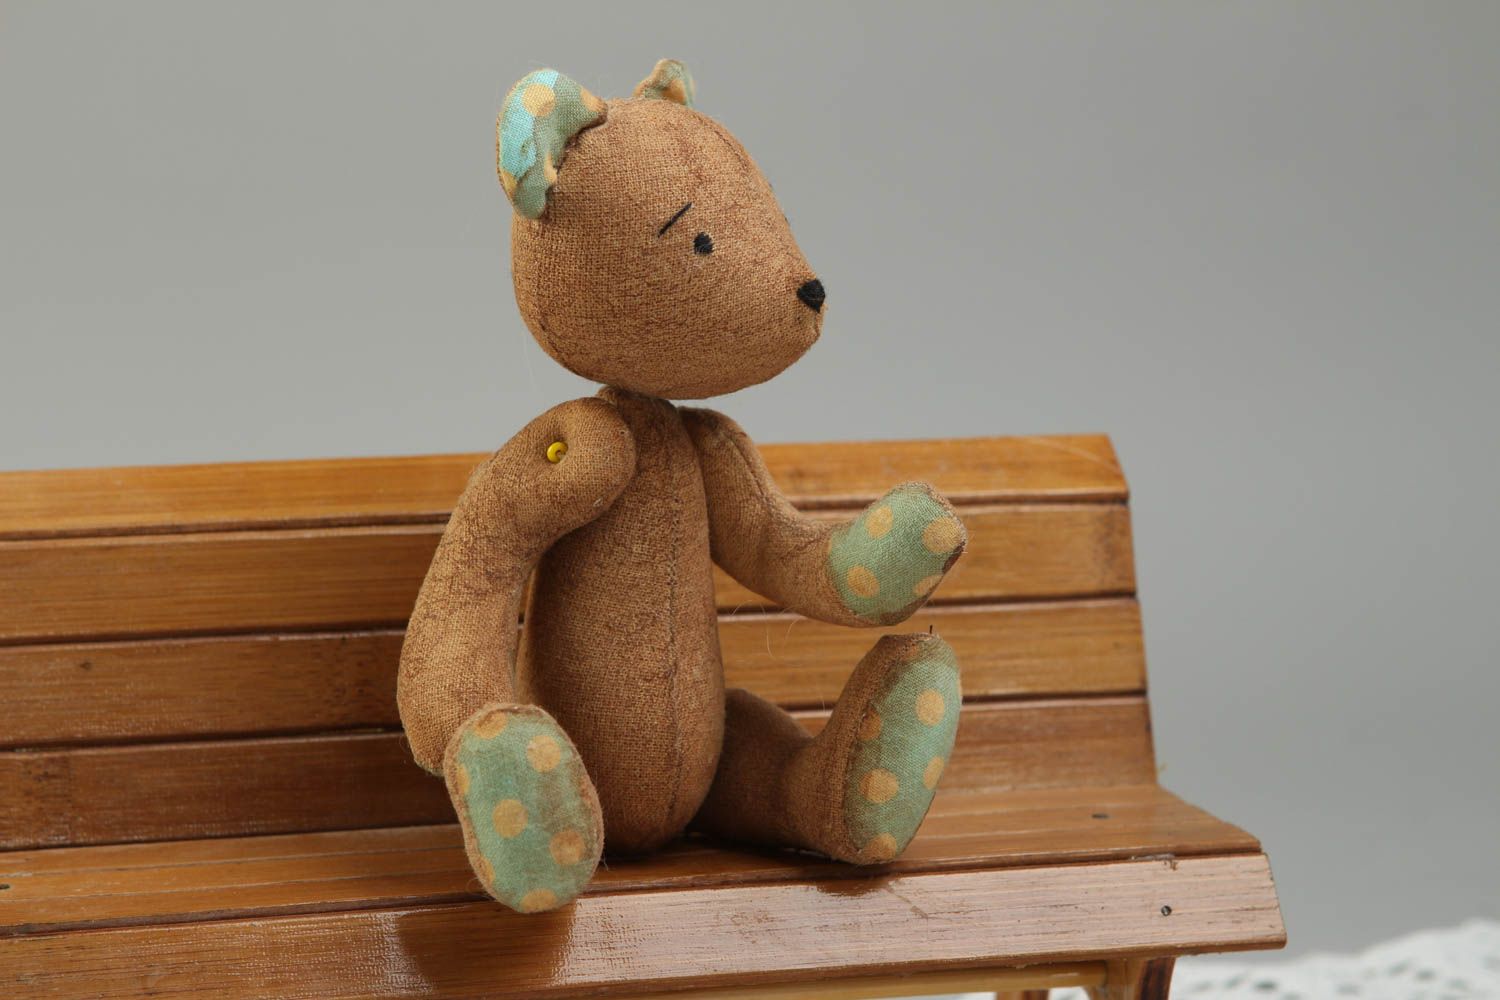 Handmade bear toy vintage toy nursery decor ideas present for children photo 1